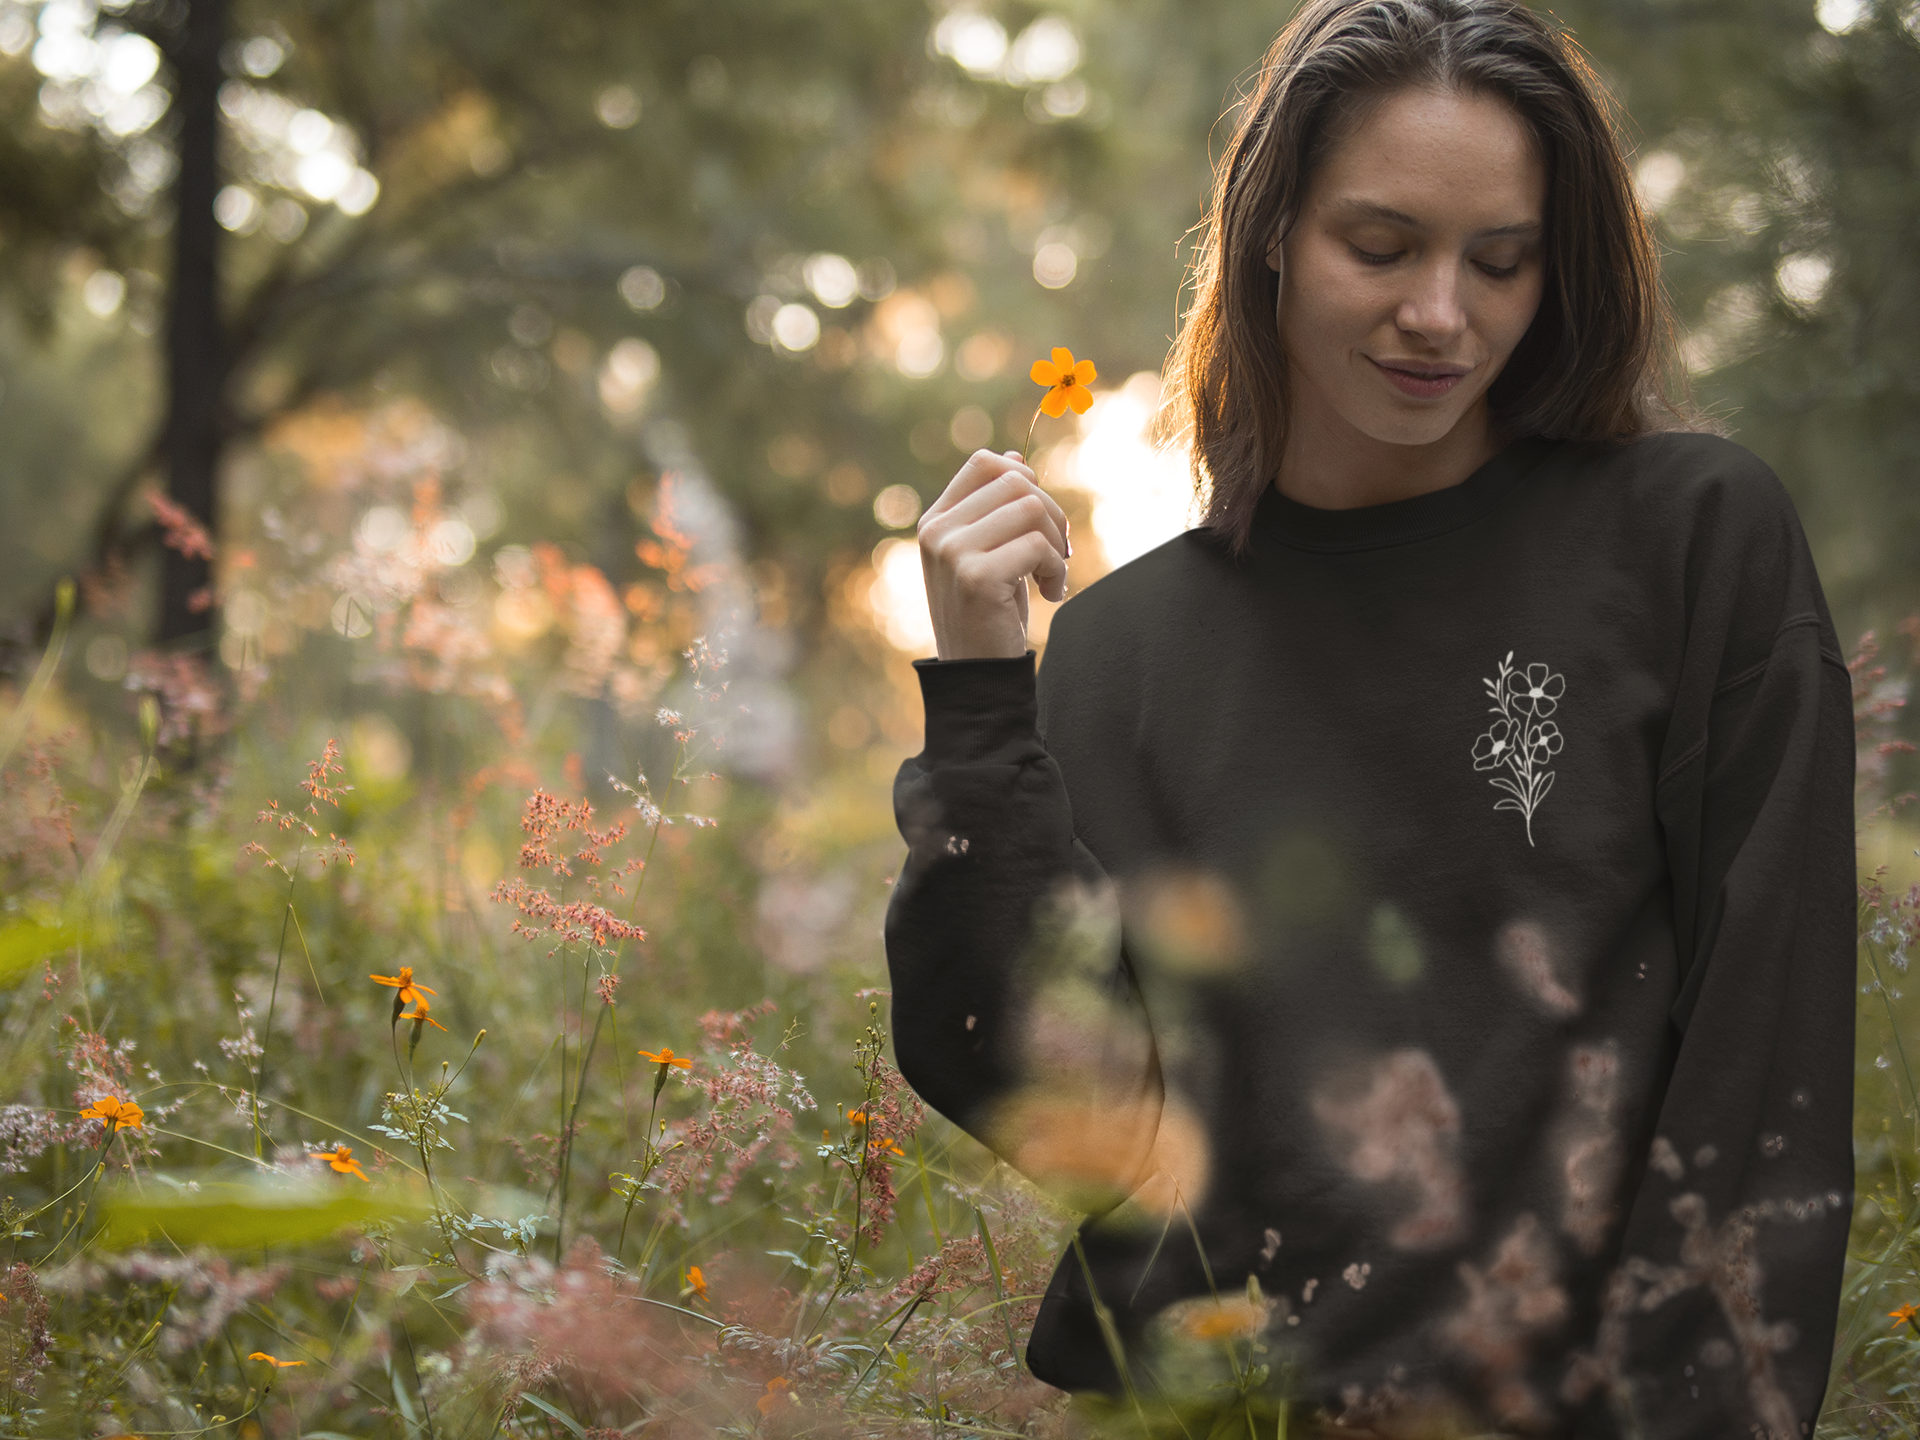 Front view of the sweatshirt on a model in a field of flowers. Black sweatshirt has a flower design on it.